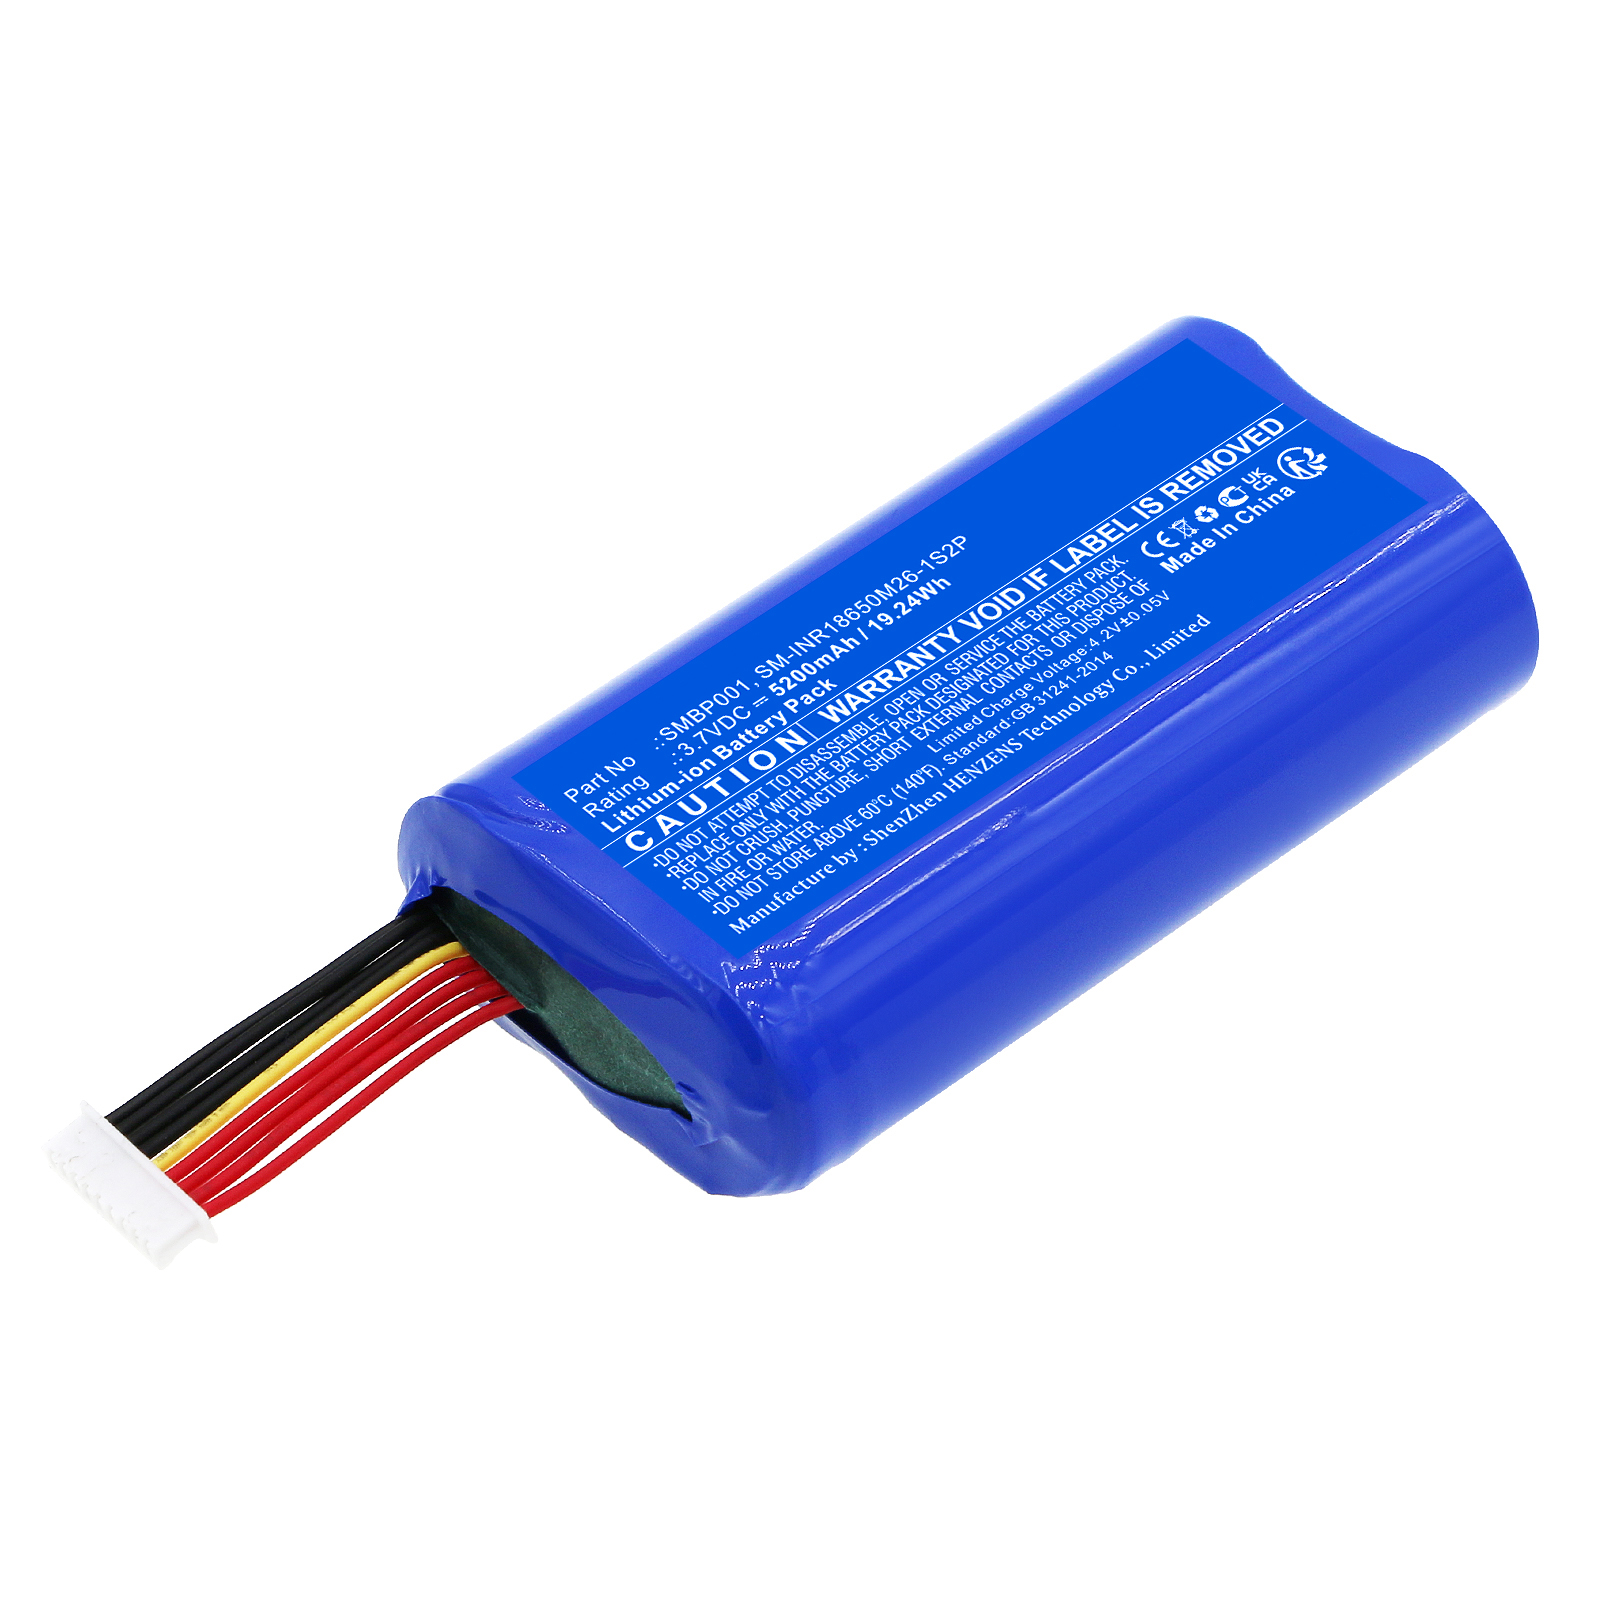 Synergy Digital Credit Card Reader Battery, Compatible with Sunmi SMBP001 Credit Card Reader Battery (Li-Ion, 3.7V, 5200mAh)